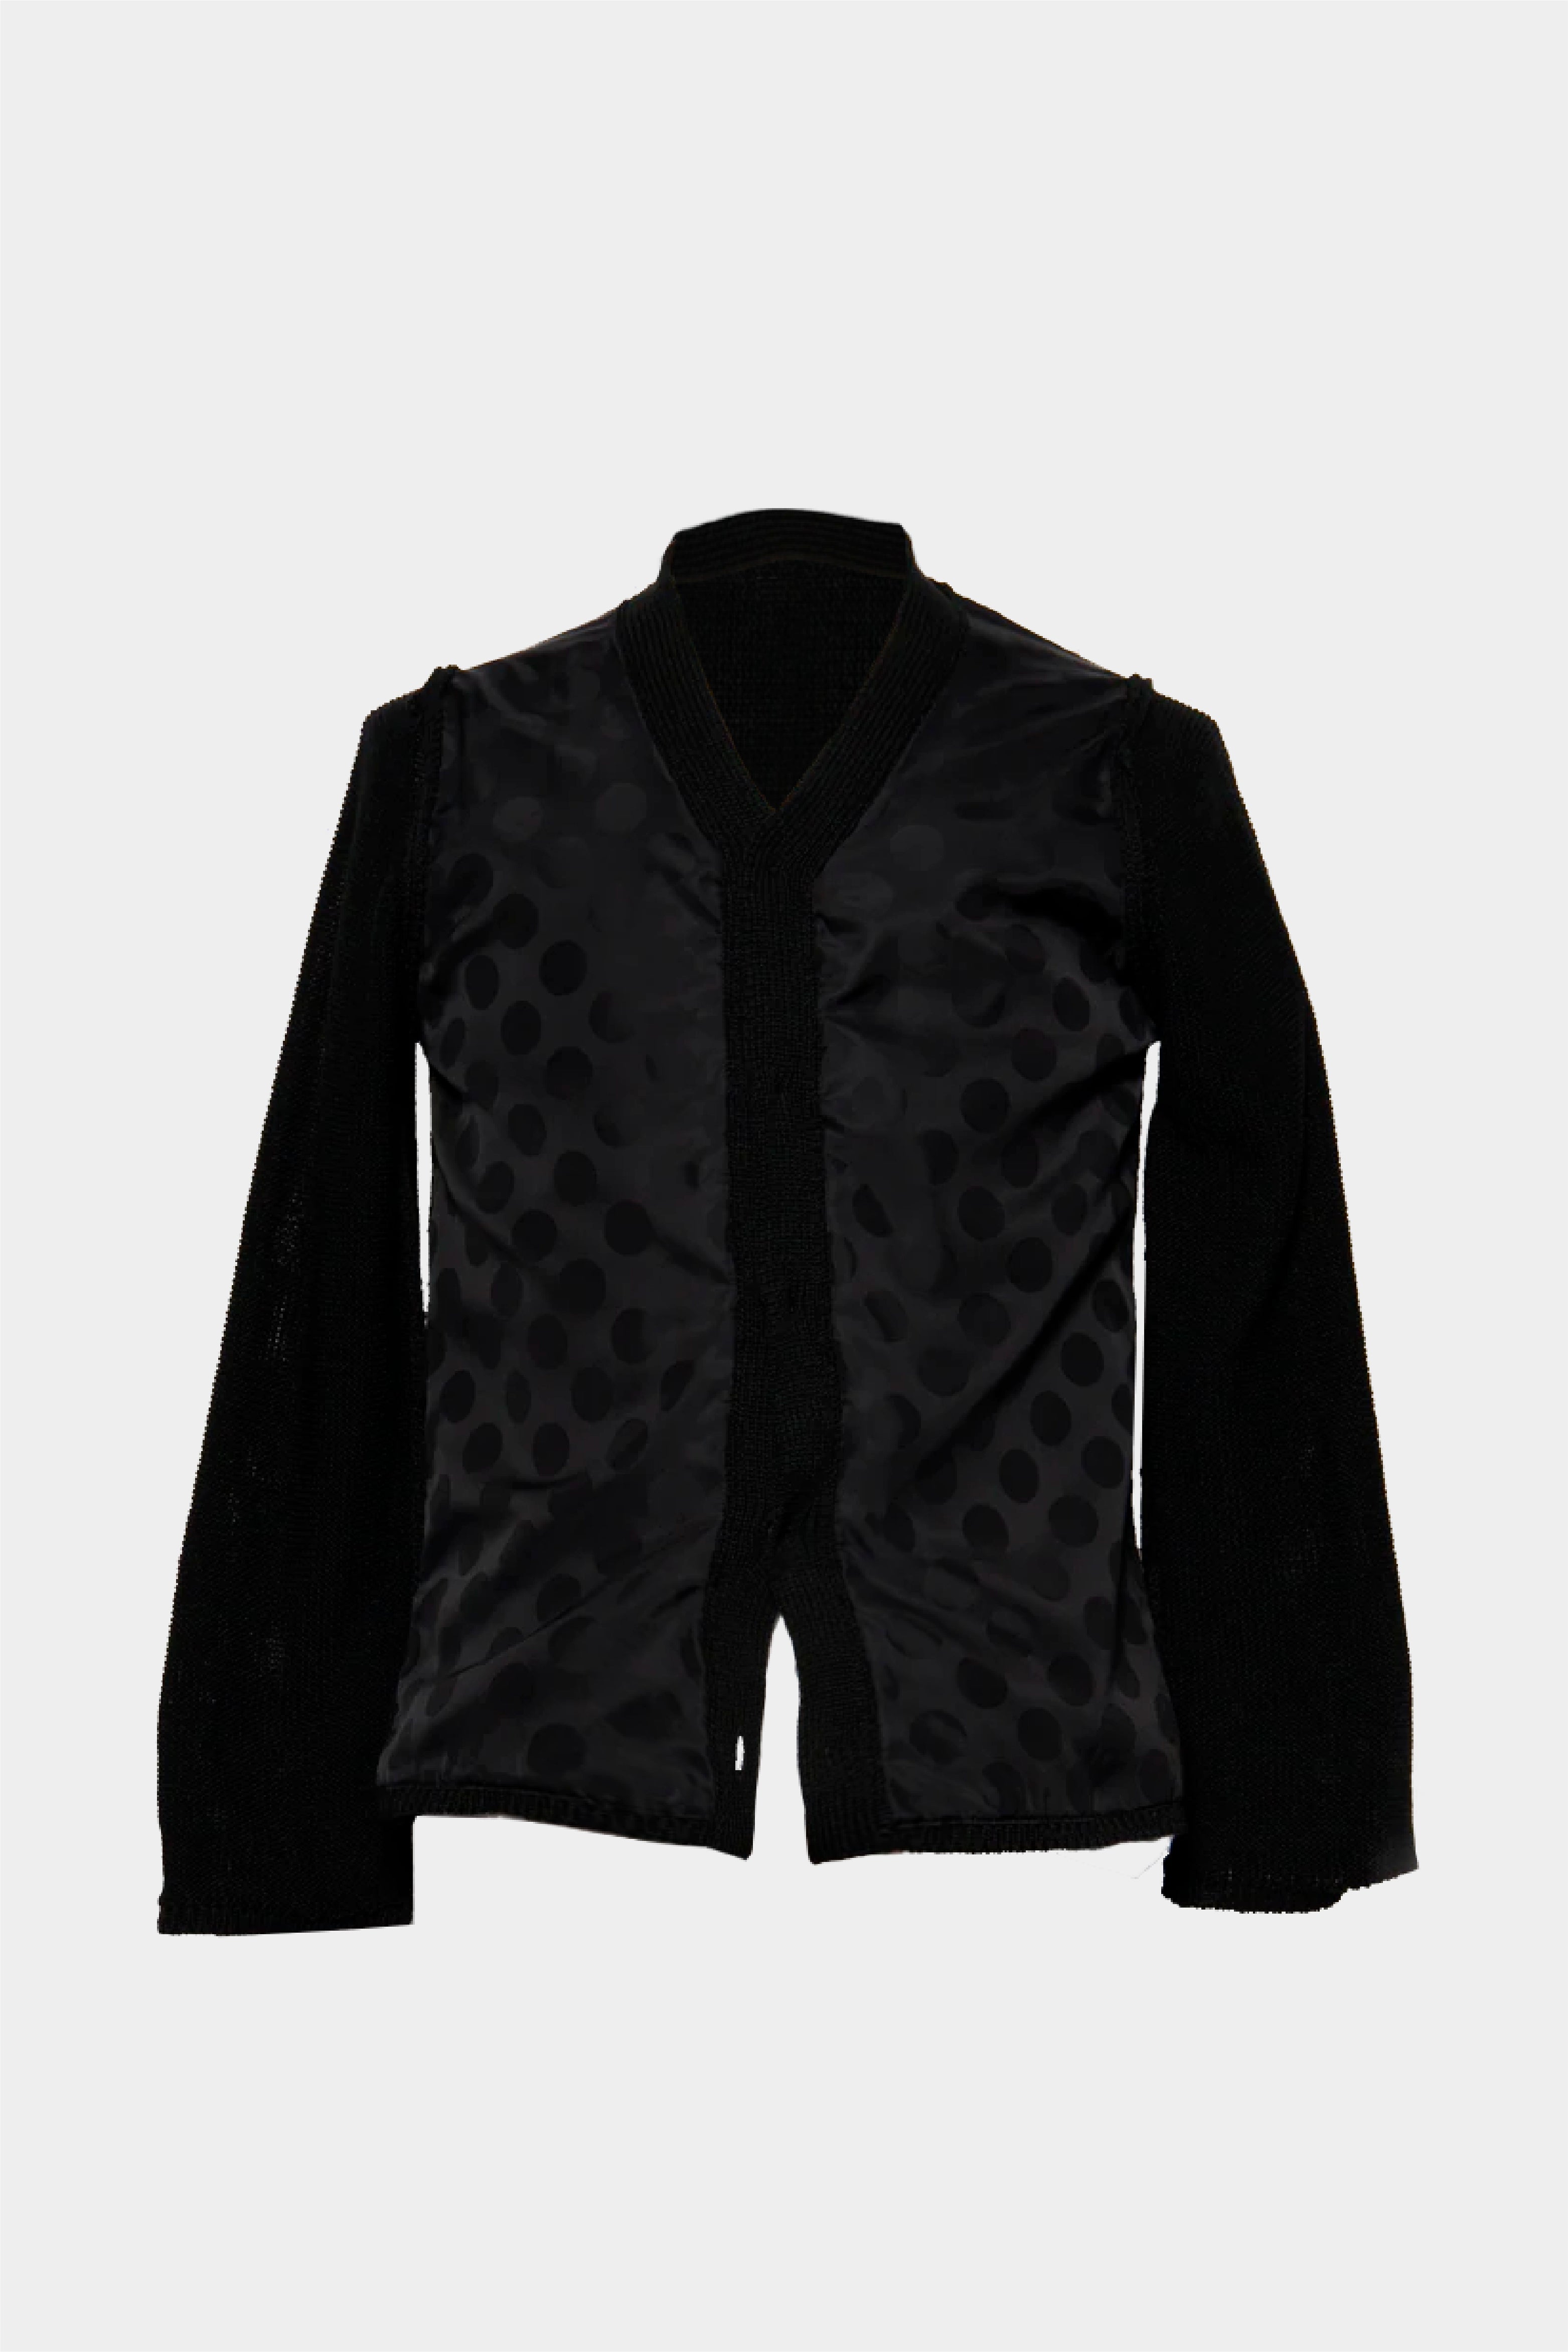 Selectshop FRAME - COMME DES GARÇONS BLACK Polka Dot Cardigan (Black) Sweats-Knits Dubai